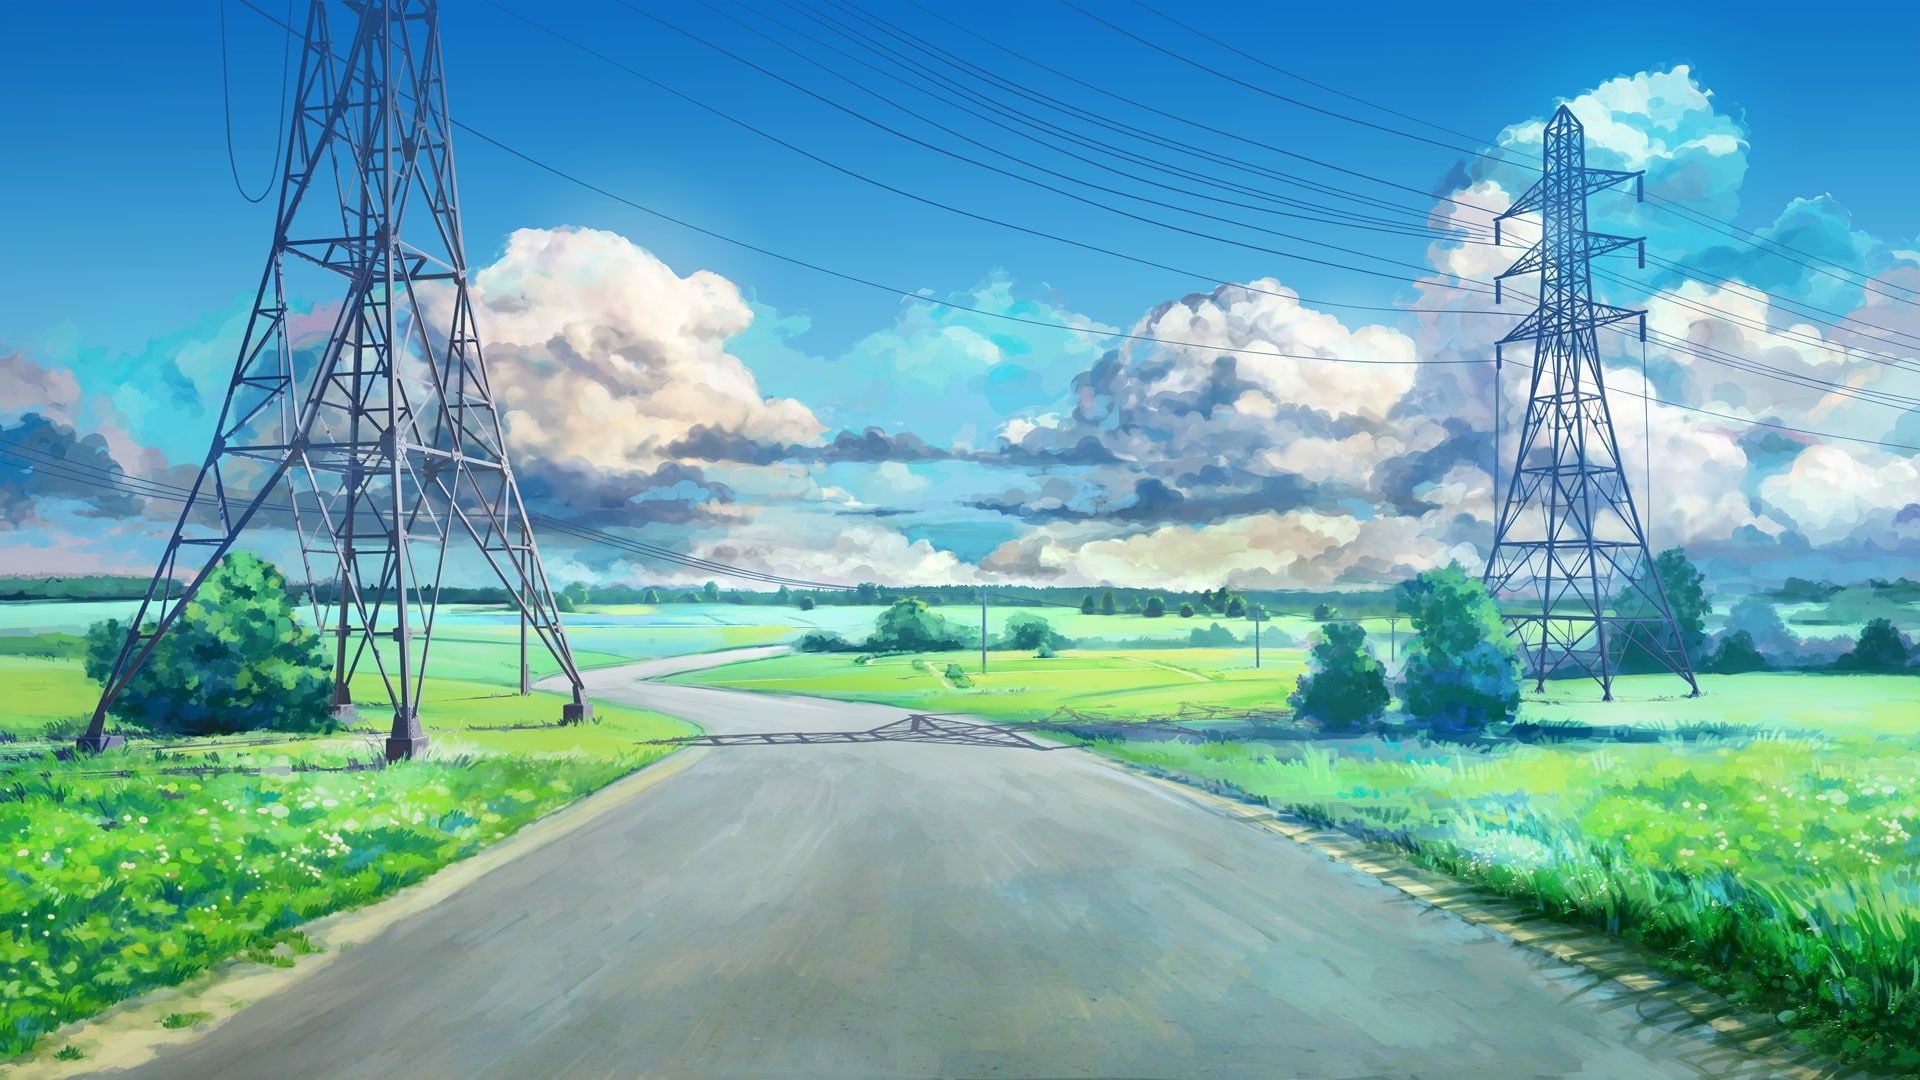 clouds blue green arsenixc anime landscape road power lines everlasting summer utility pole visual novel P #wal. Anime summer, Summer wallpaper, Visual novel